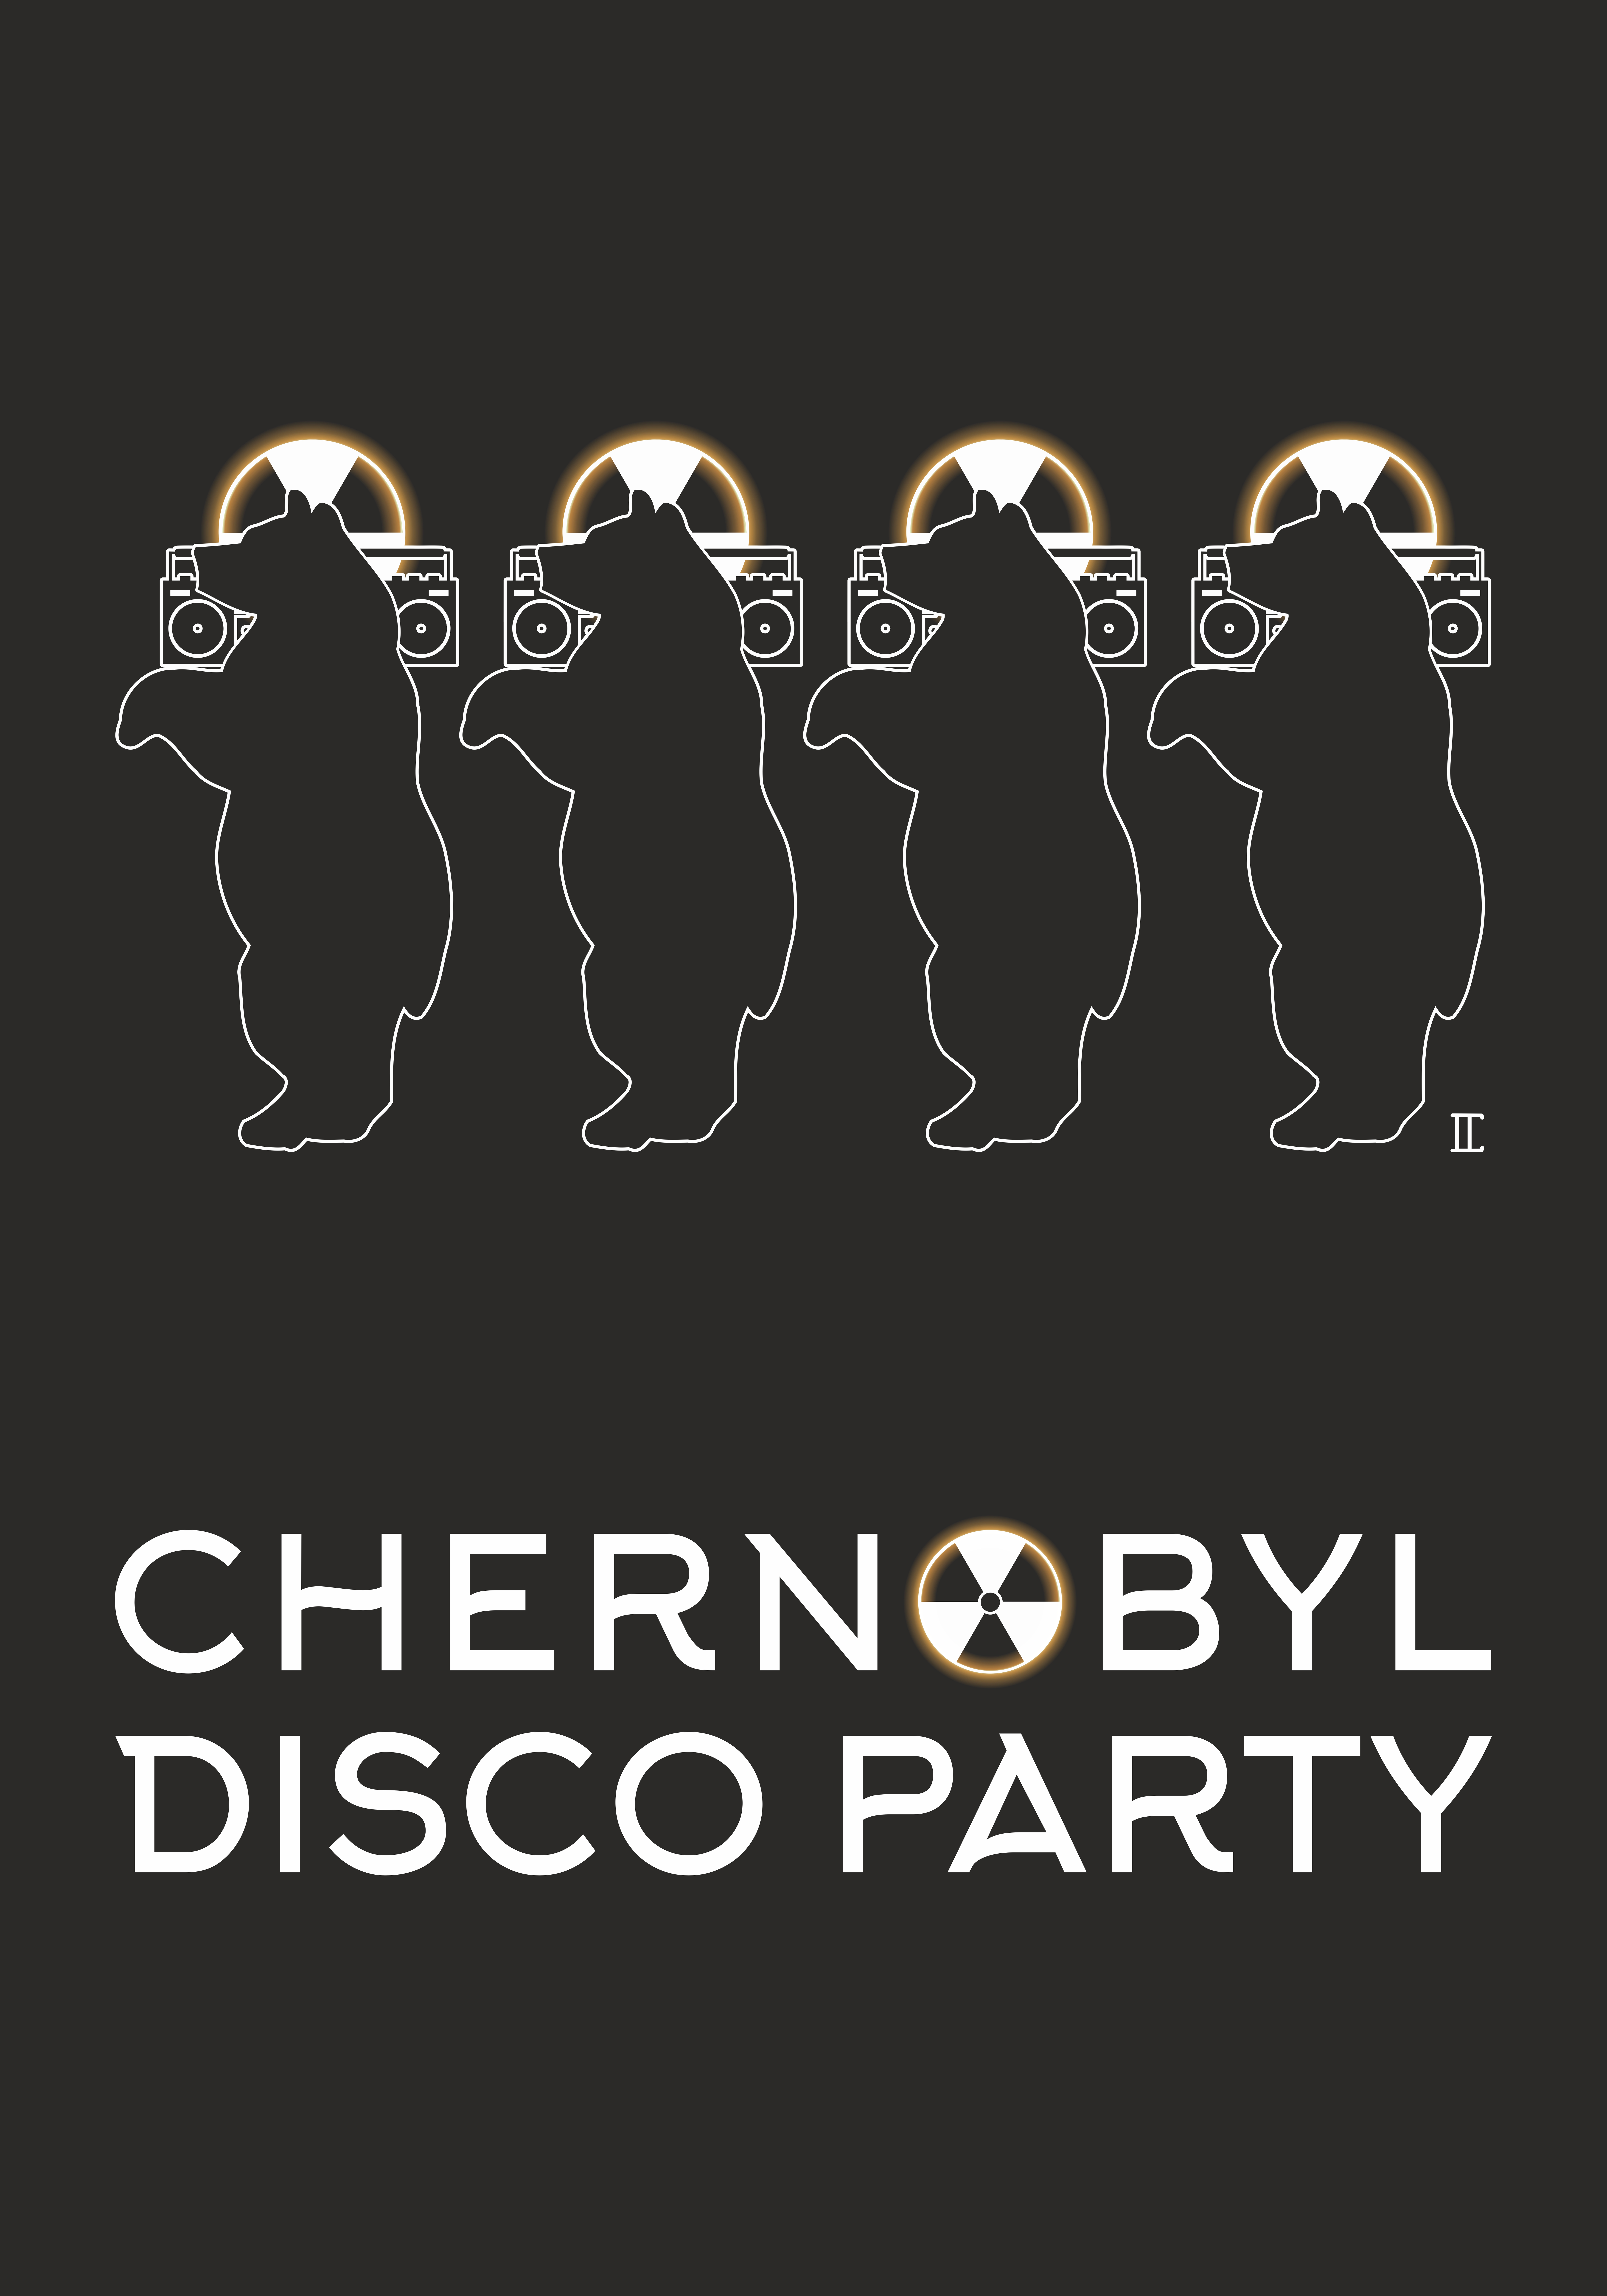 Ihor Sarabieiev "Chernobyl disko", free via creativesforukraine.com